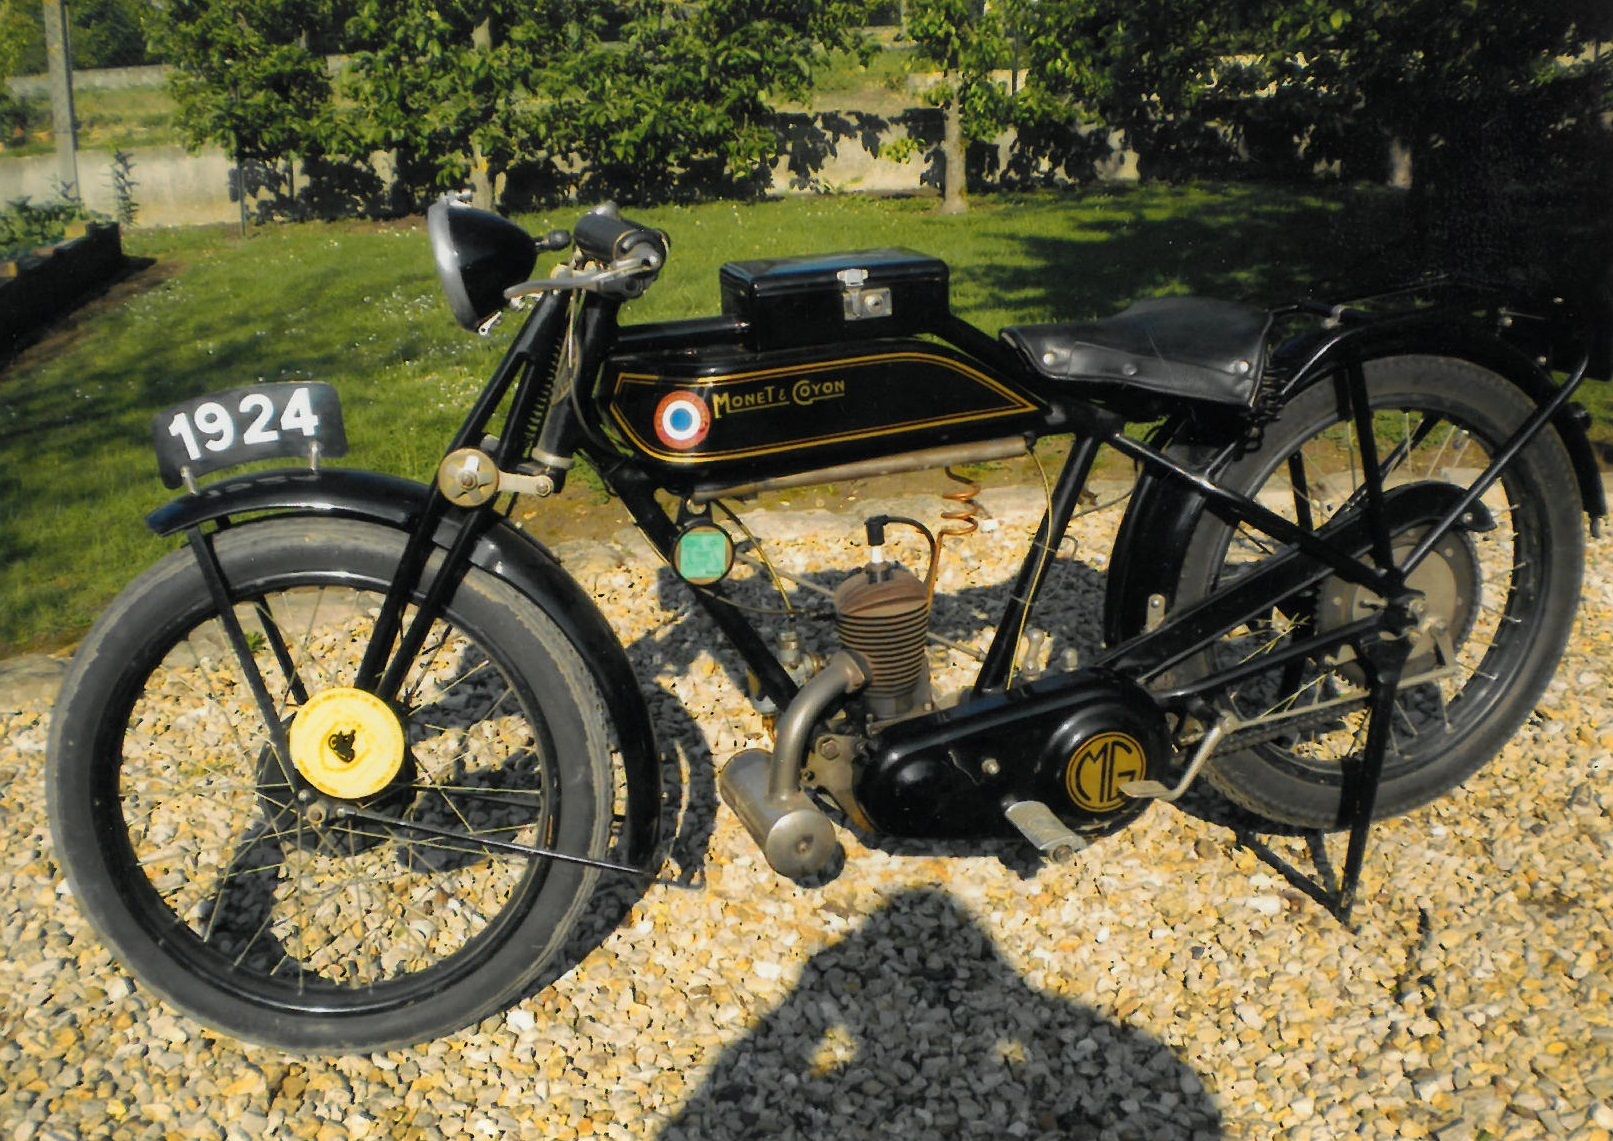 Null D.夫人的遗产无保留
1924年 莫内-戈扬
T175型
序号：35031
法国注册
1 400 / 1 800 €
Monet-Goyon（MG）是&hellip;